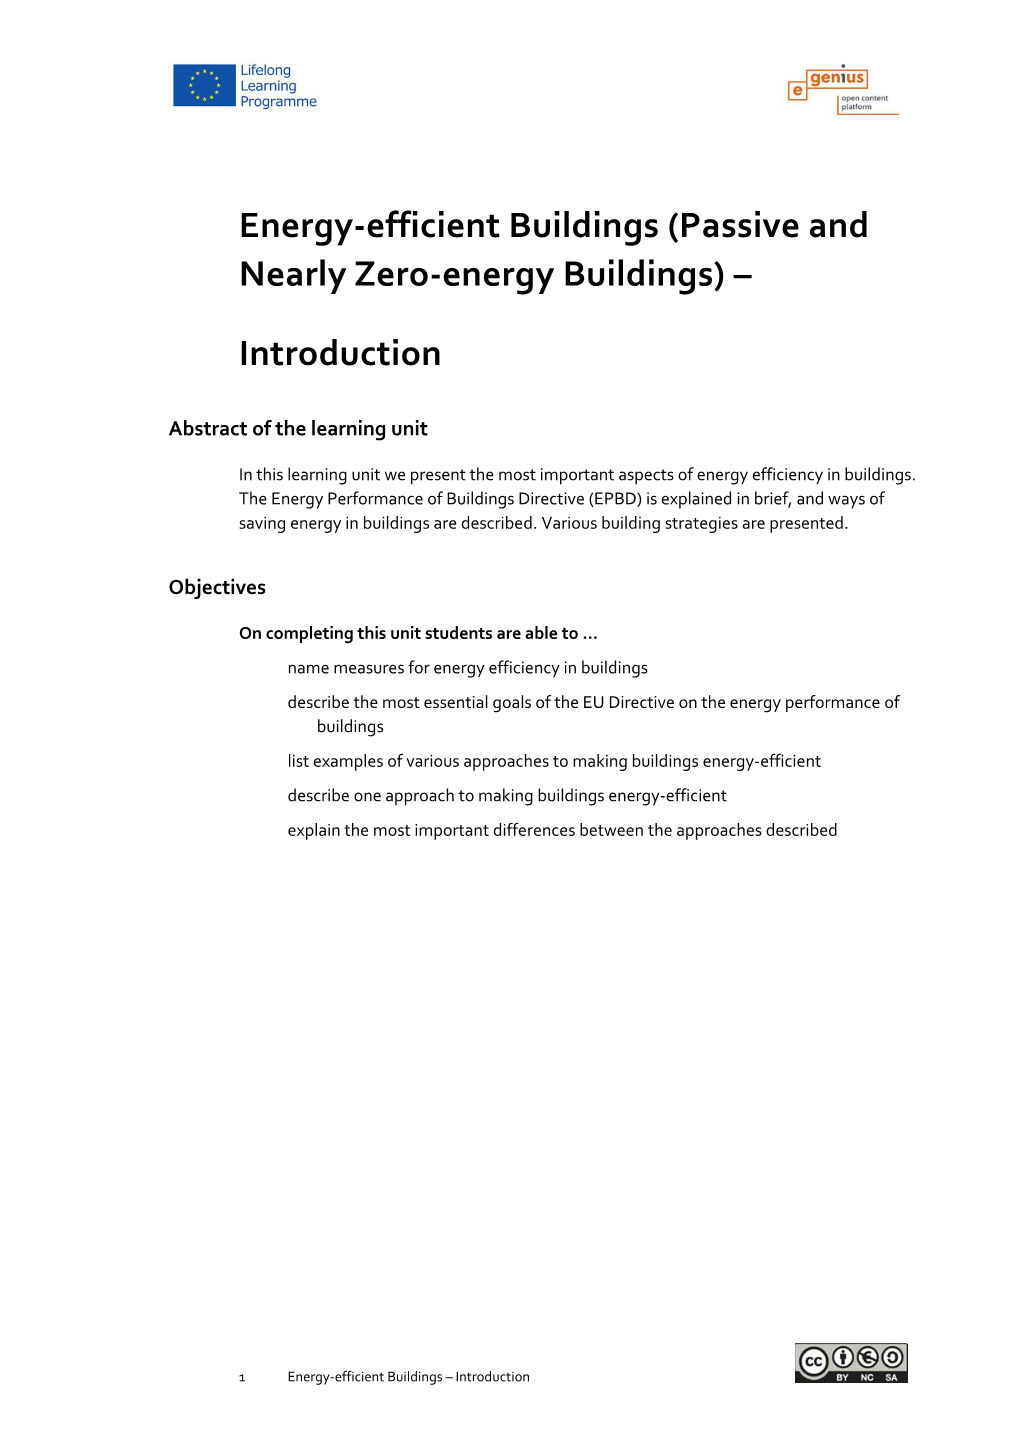 Energy-Efficient Buildings (Passive and Nearly Zero-Energy Buildings)